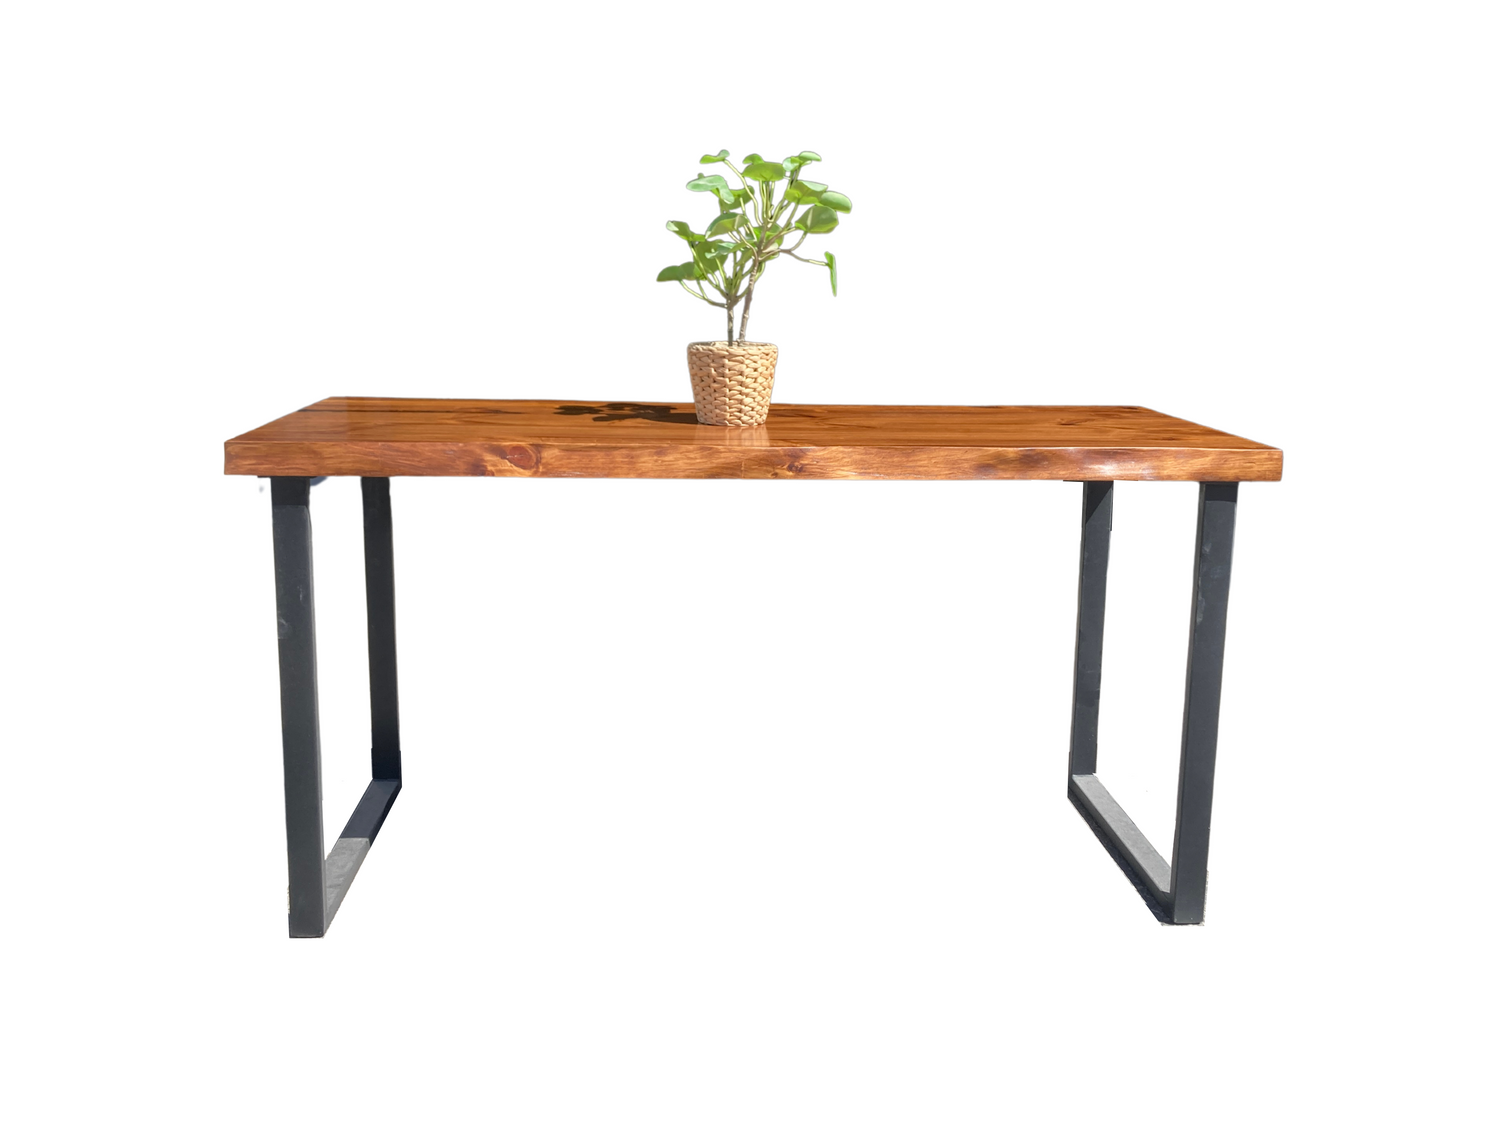 UMBUZÖ Modern Desk - Reclaimed Wood Desk - Live Edge Desk - Walnut Desk